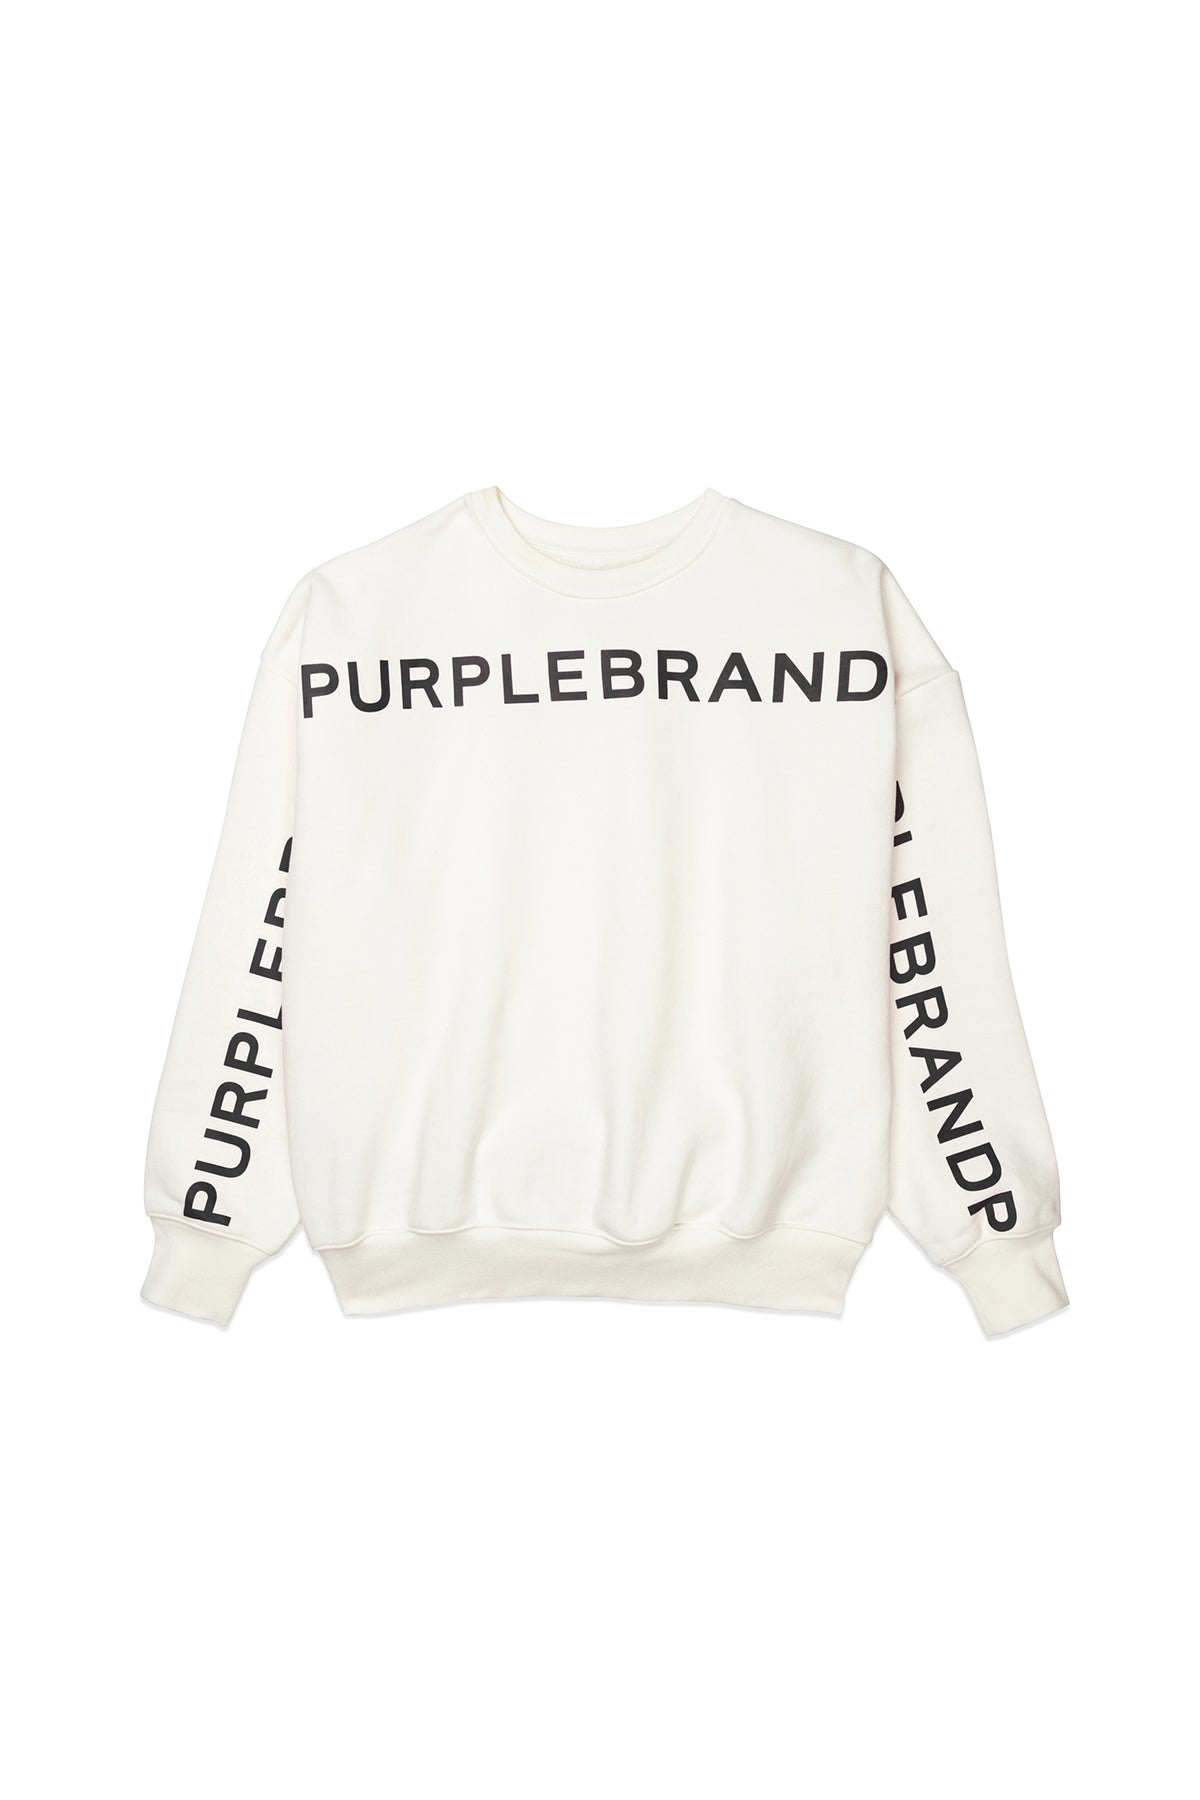 Purple Brand Wordmark Repeat Crewneck